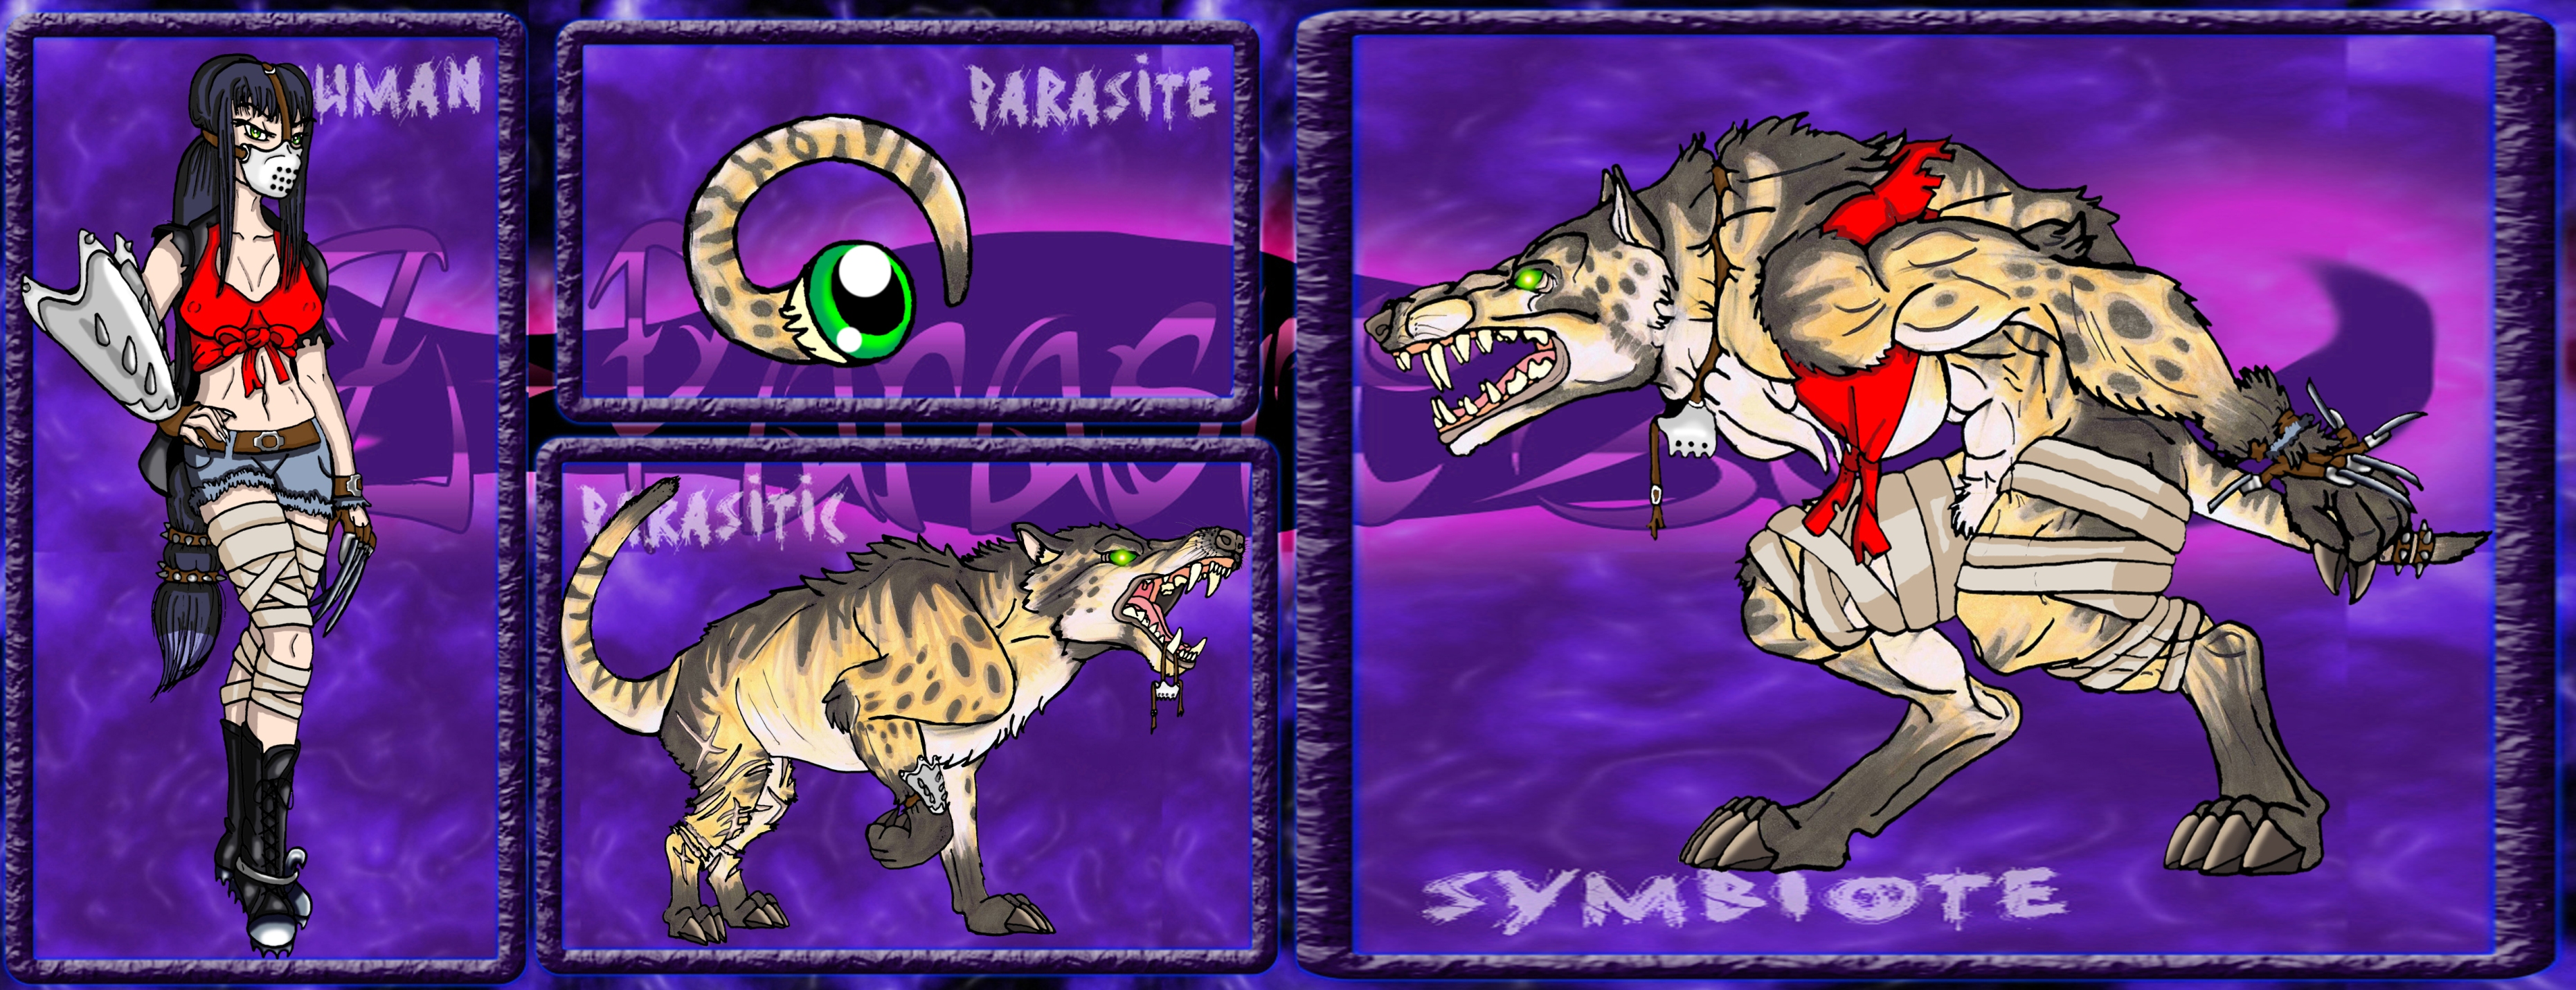 My Z-parasite character - Ferus